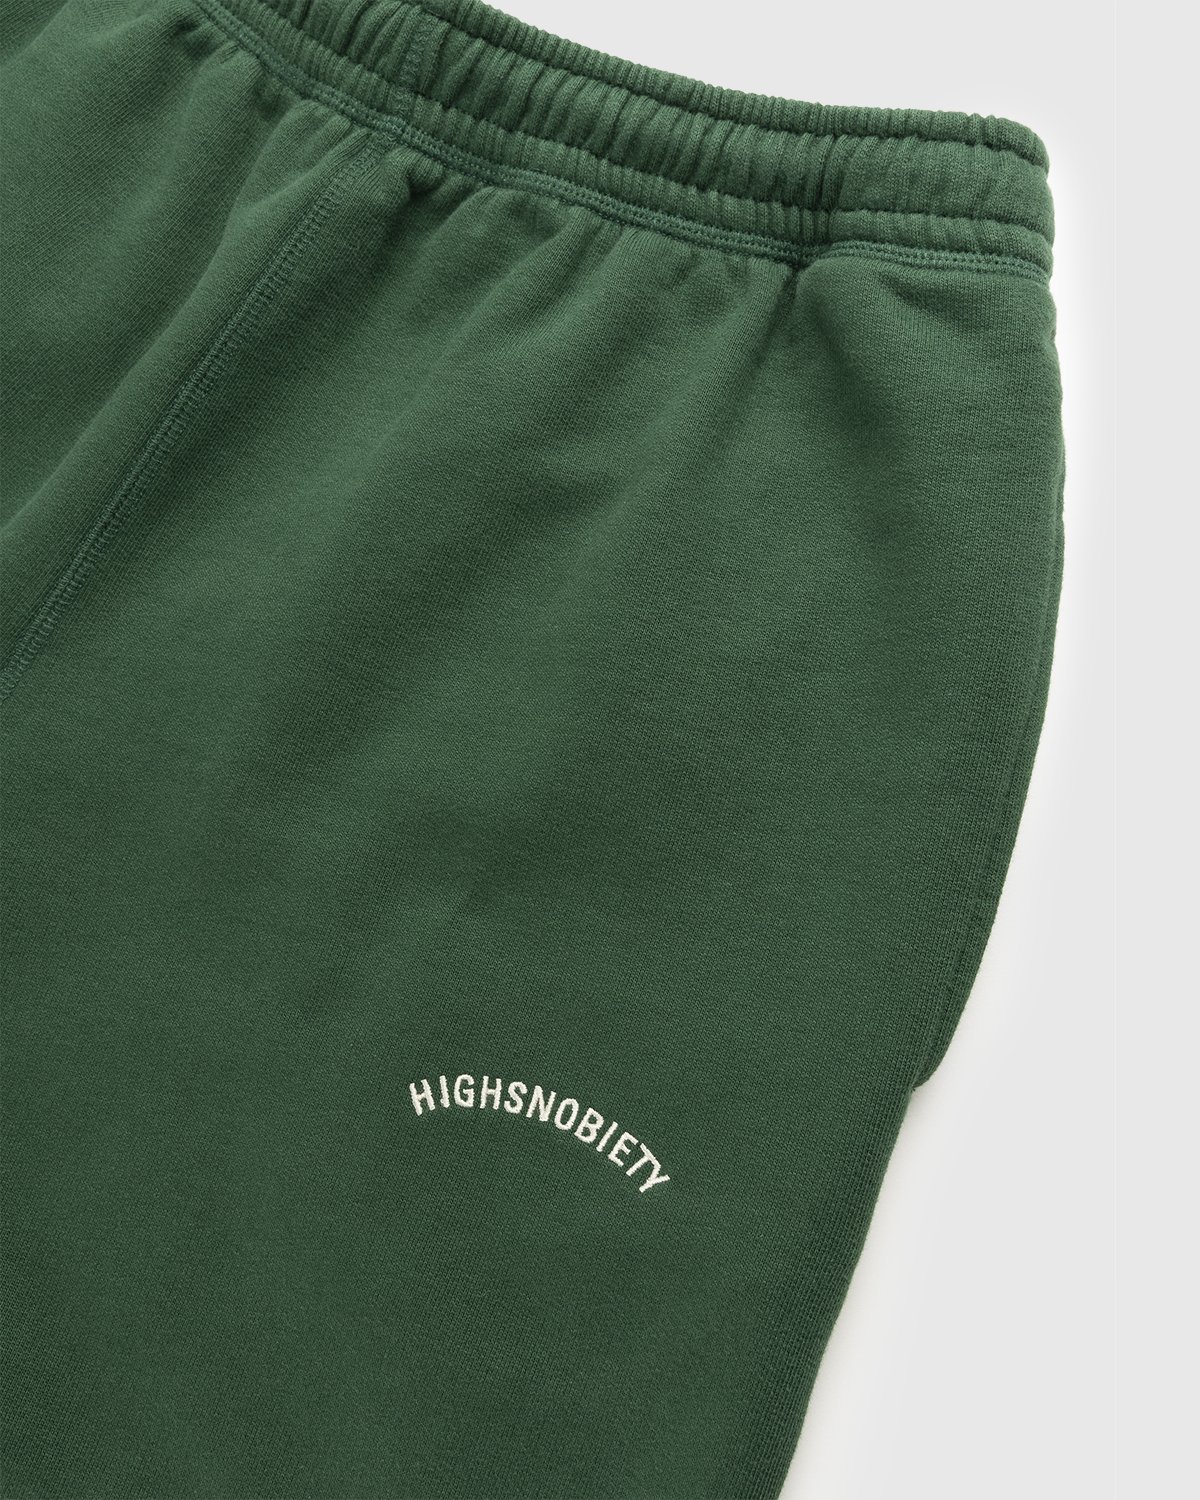 Highsnobiety - Logo Fleece Staples Pants Campus Green - Clothing - Green - Image 4